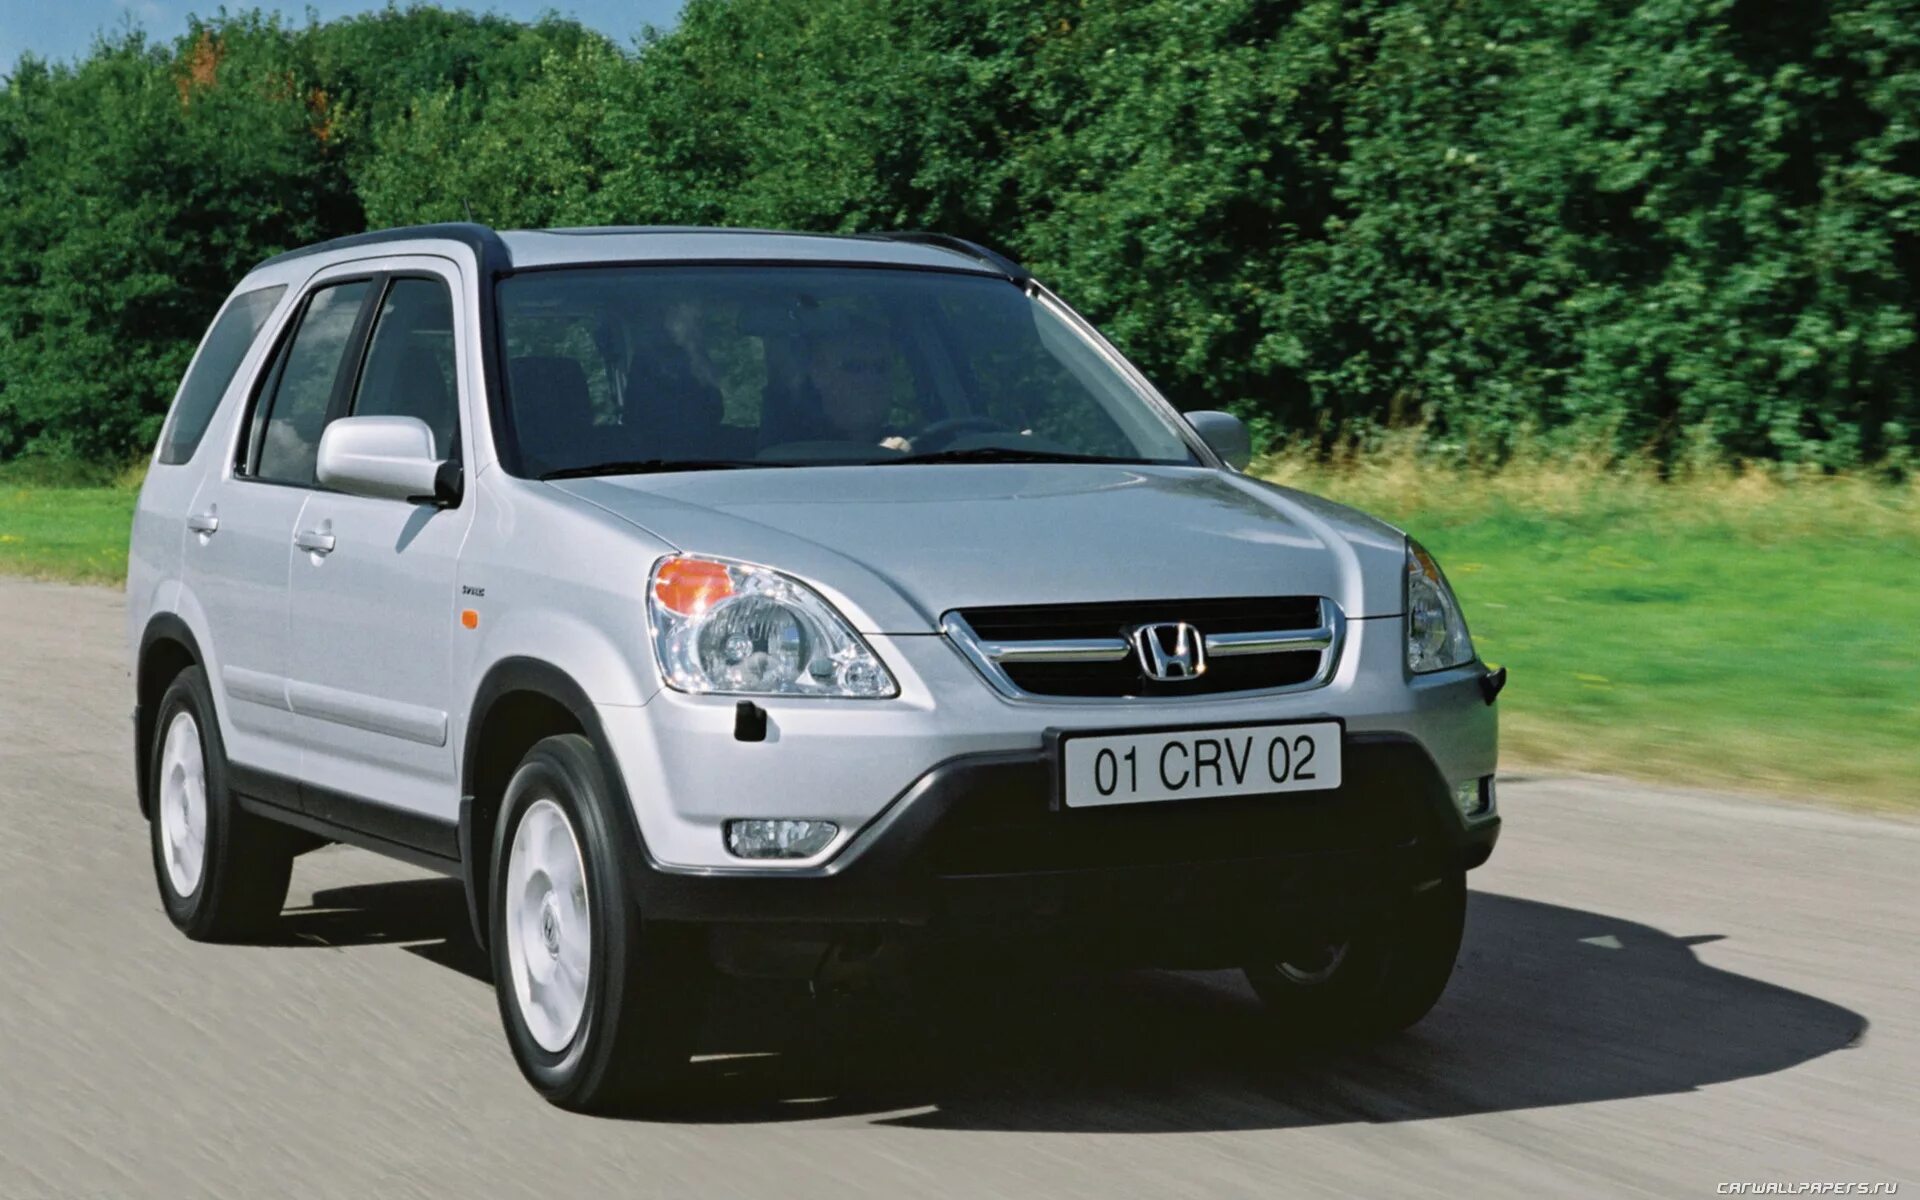 Honda cr v 2003. Honda CR-V 2002. Honda CRV 2002. Хонда CR-V 2002-2006. Honda CRV 2 2005.